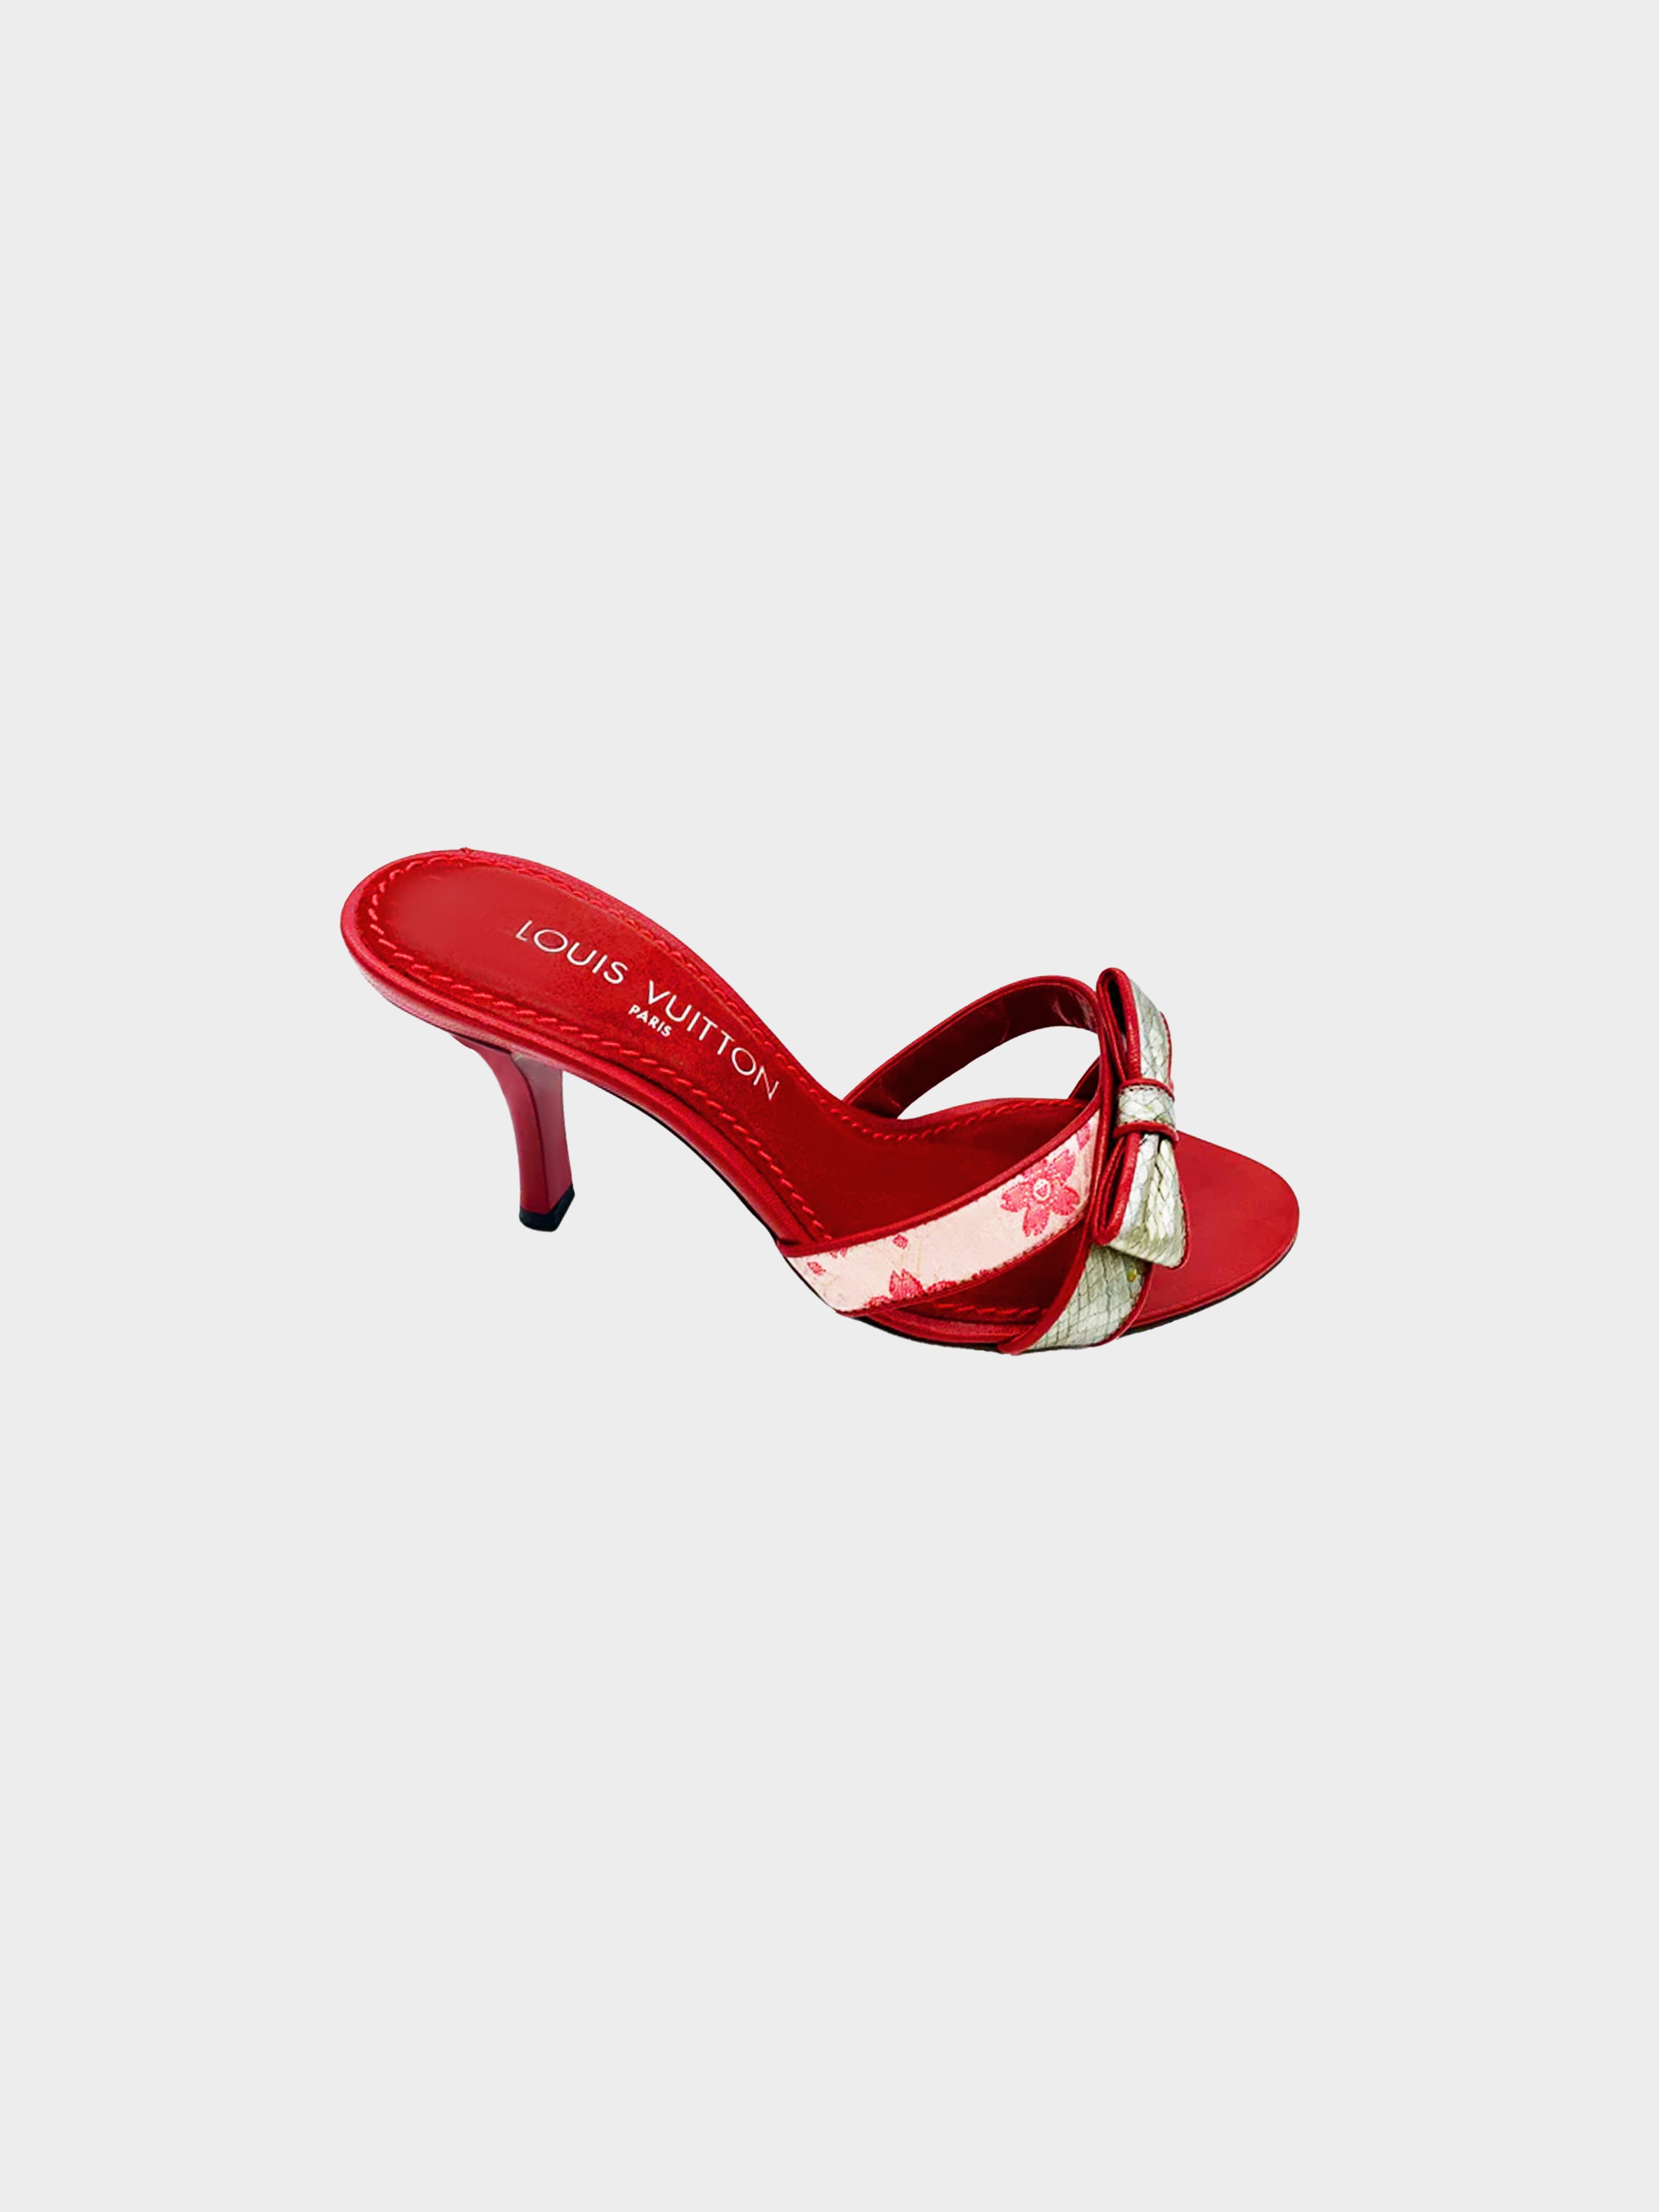 Louis Vuitton 2003 Red Cherry Heels